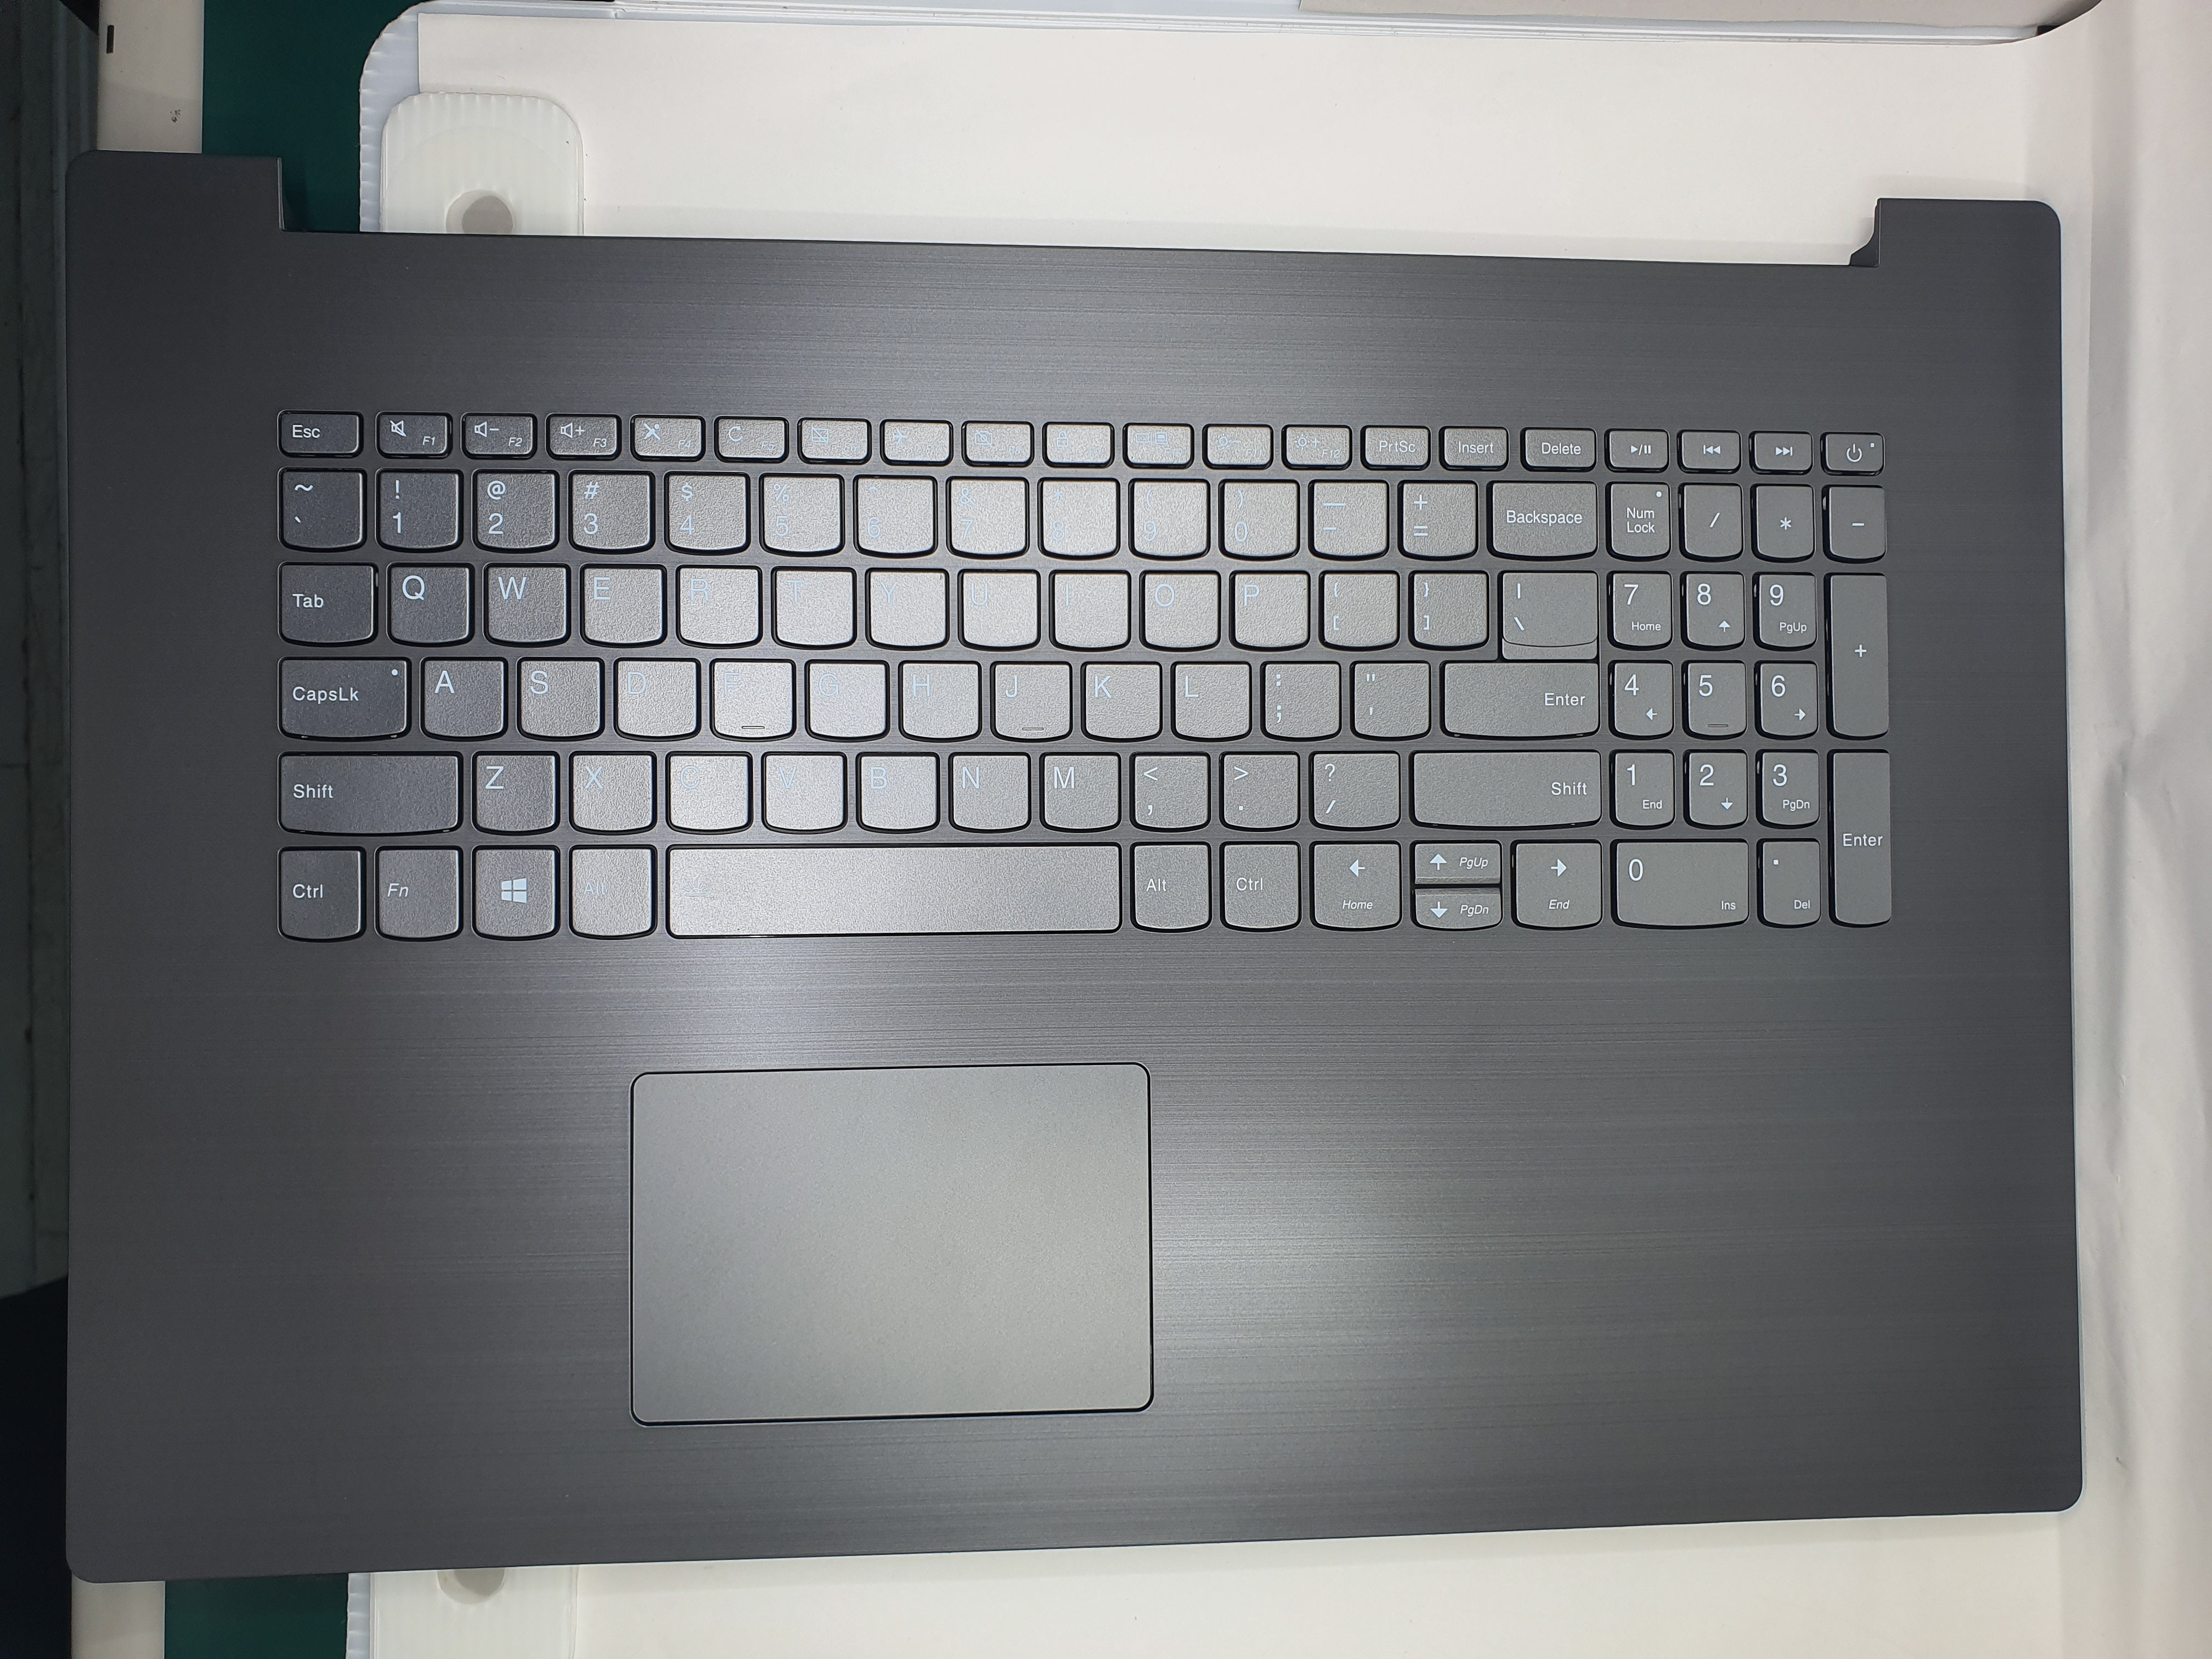 Lenovo Keyboard for Lenovo IdeaPad 330-17ICH